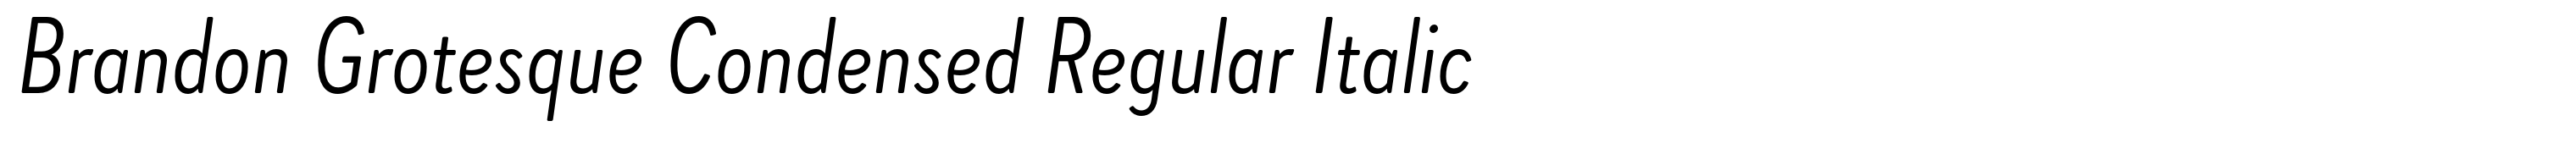 Brandon Grotesque Condensed Regular Italic